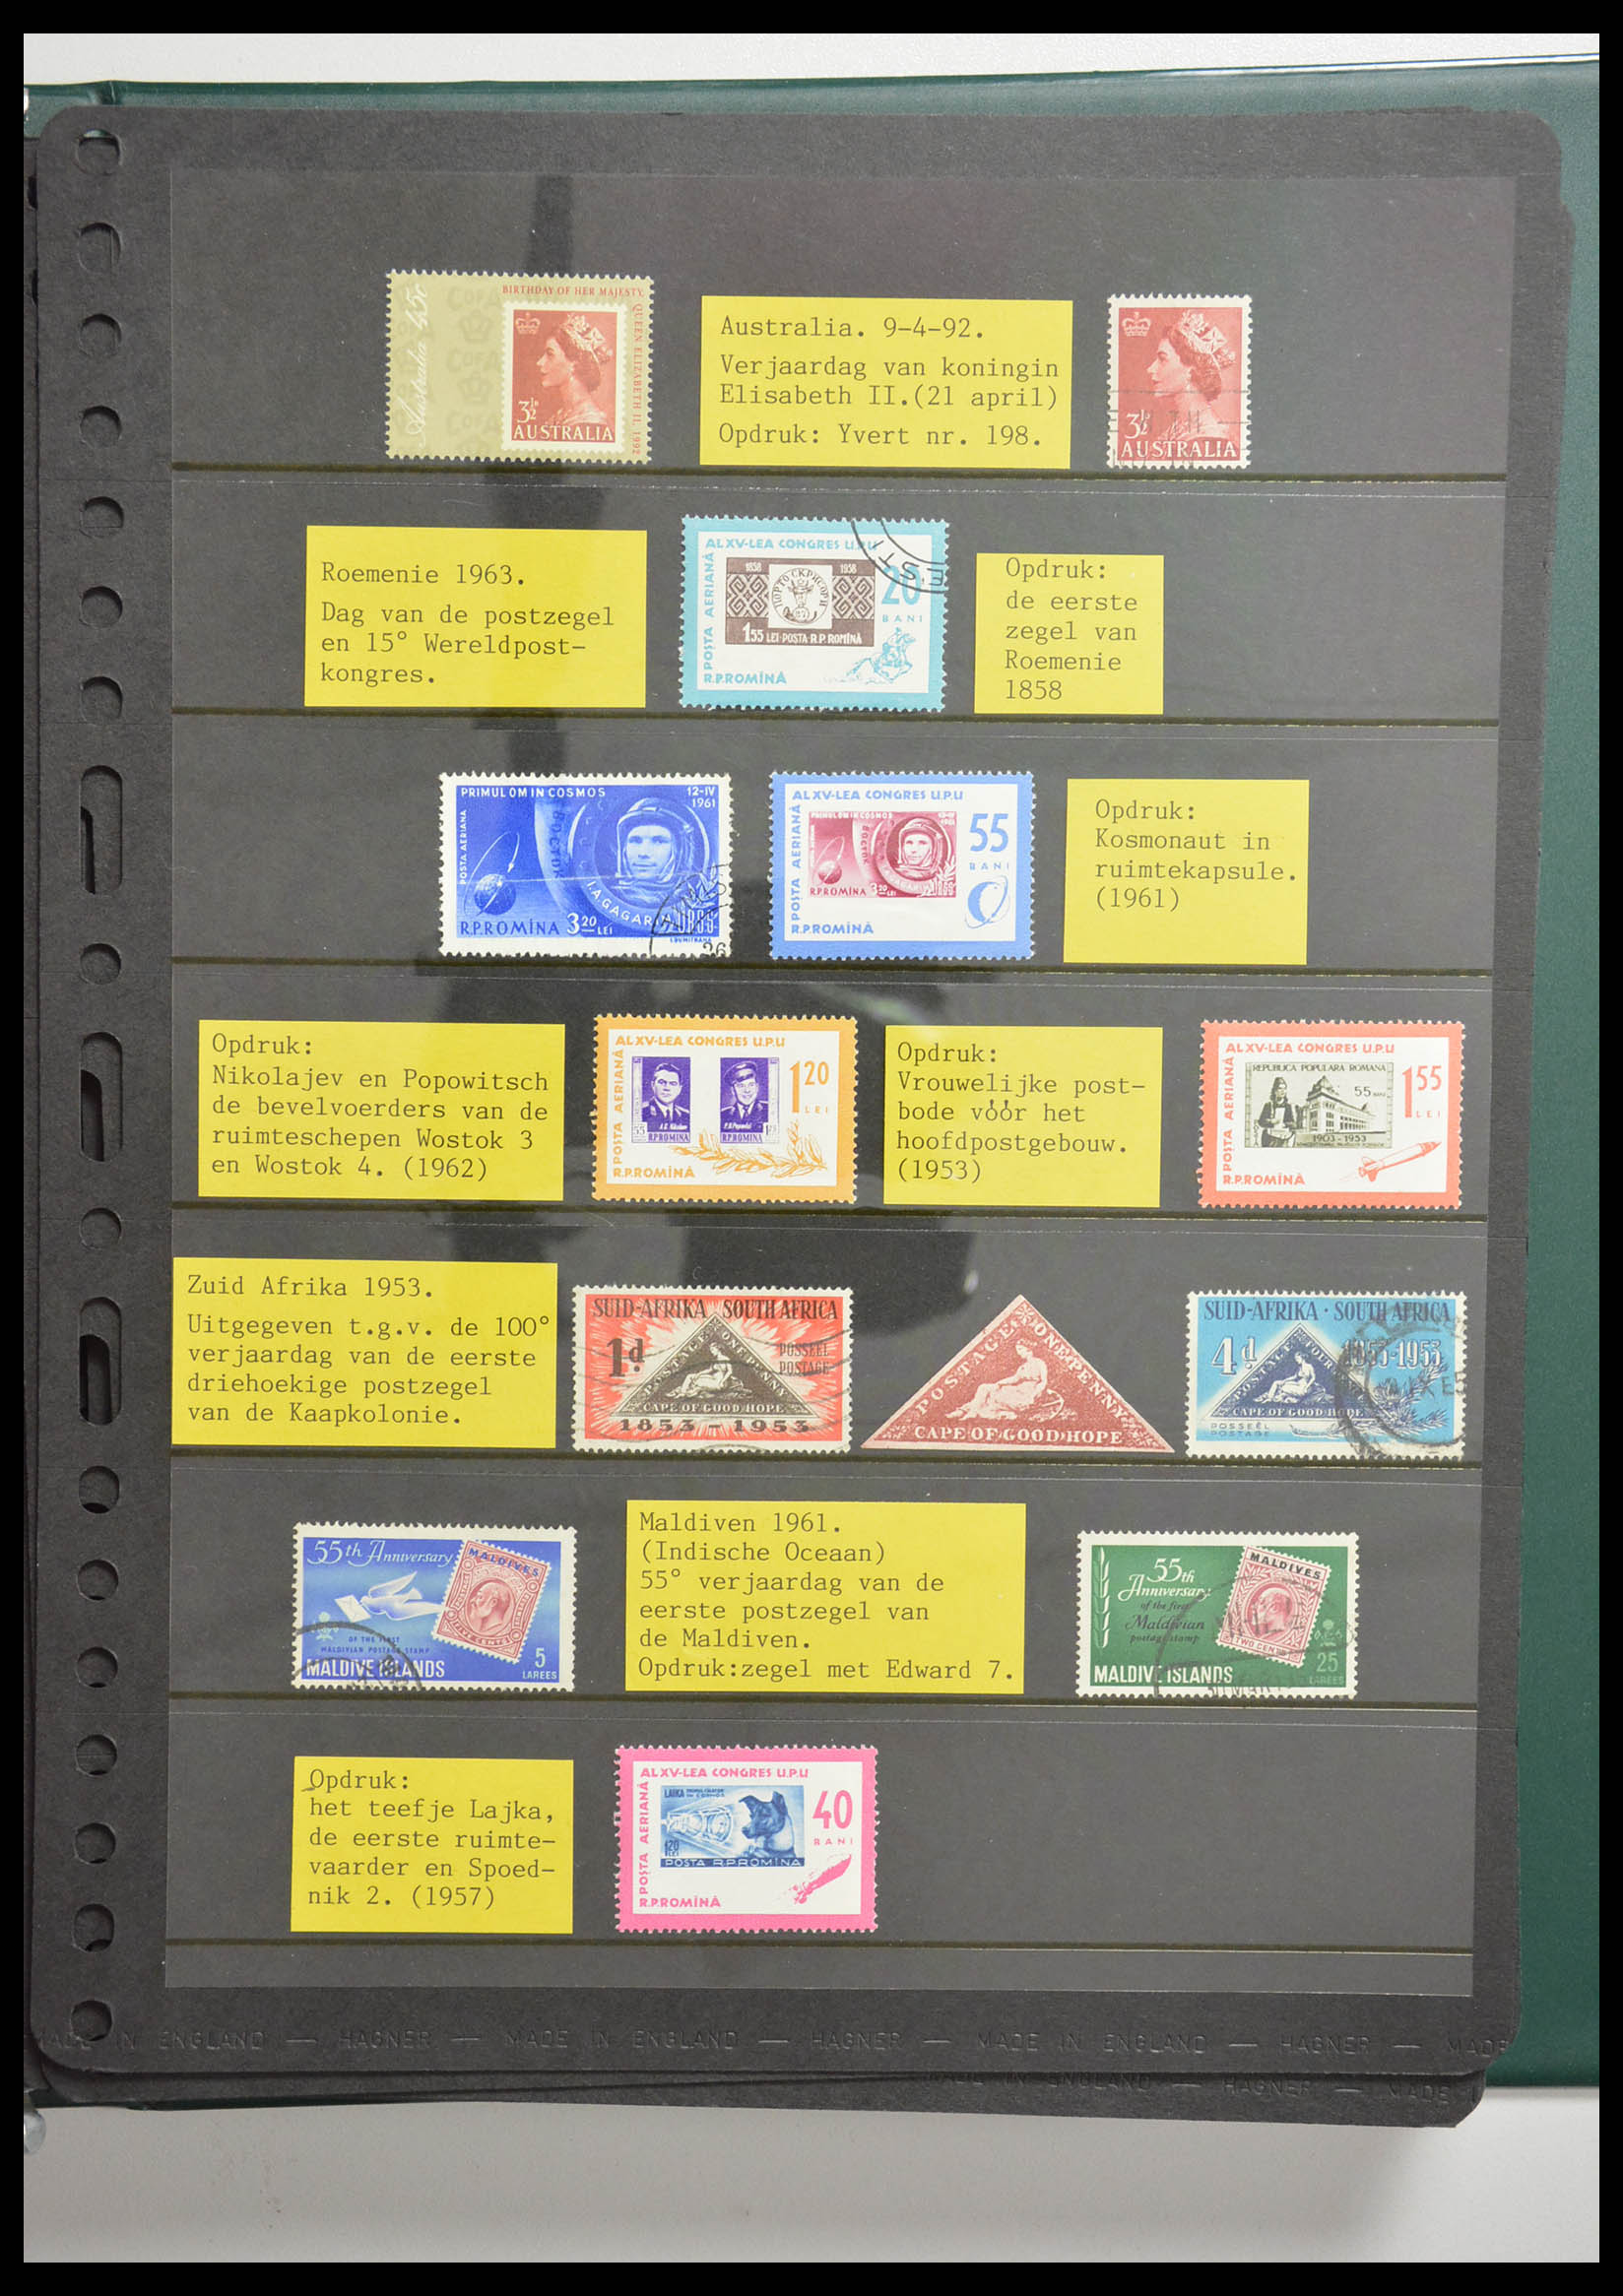 28337 005 - 28337 Postzegel op postzegel 1840-2001.